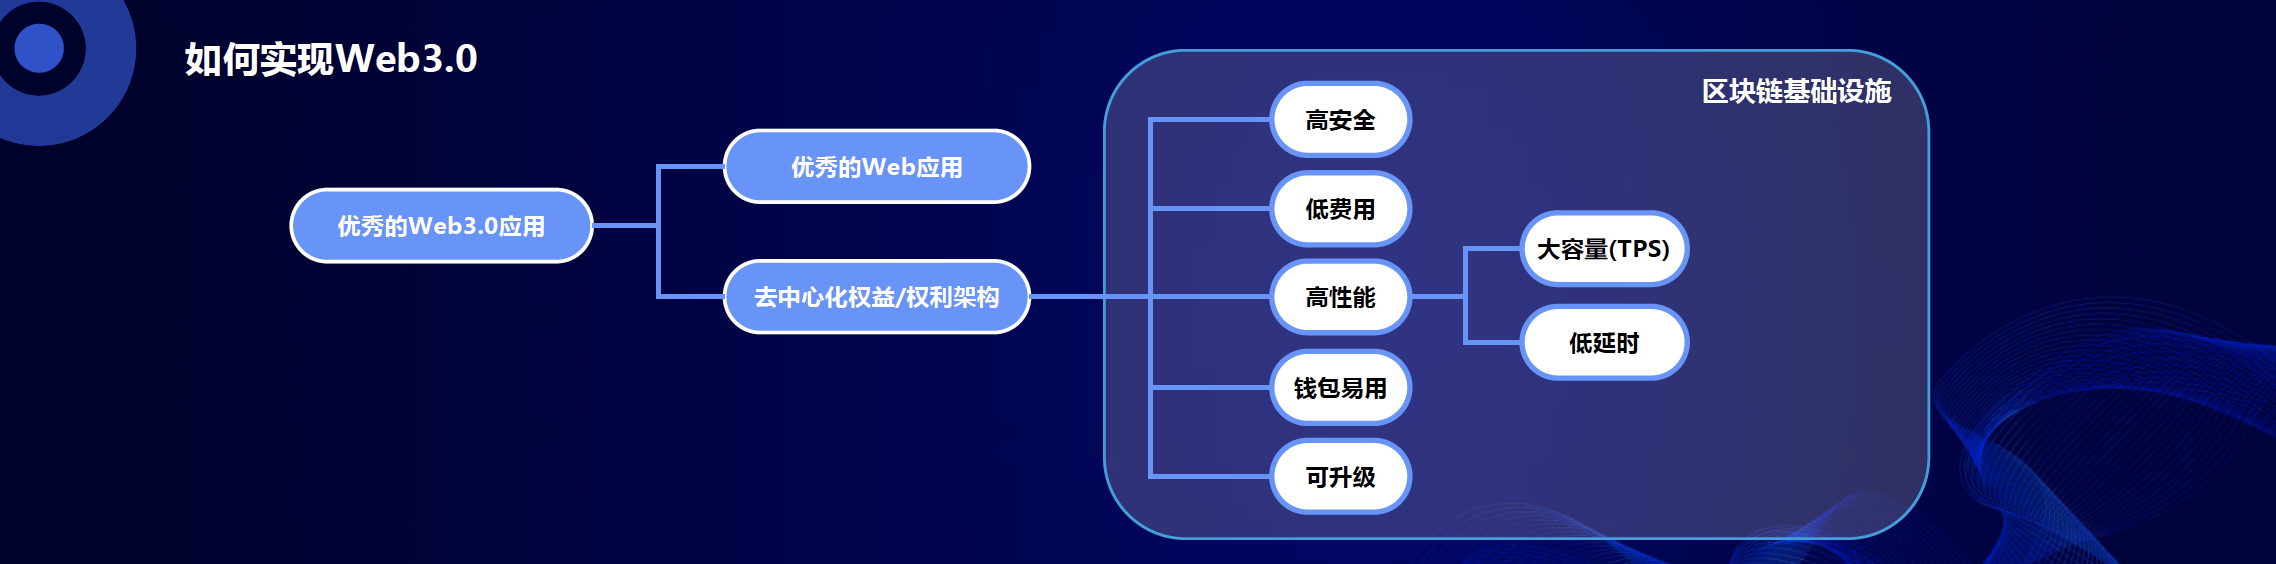 Web3.0是Web2.0的延续 而应用链则是实现工具